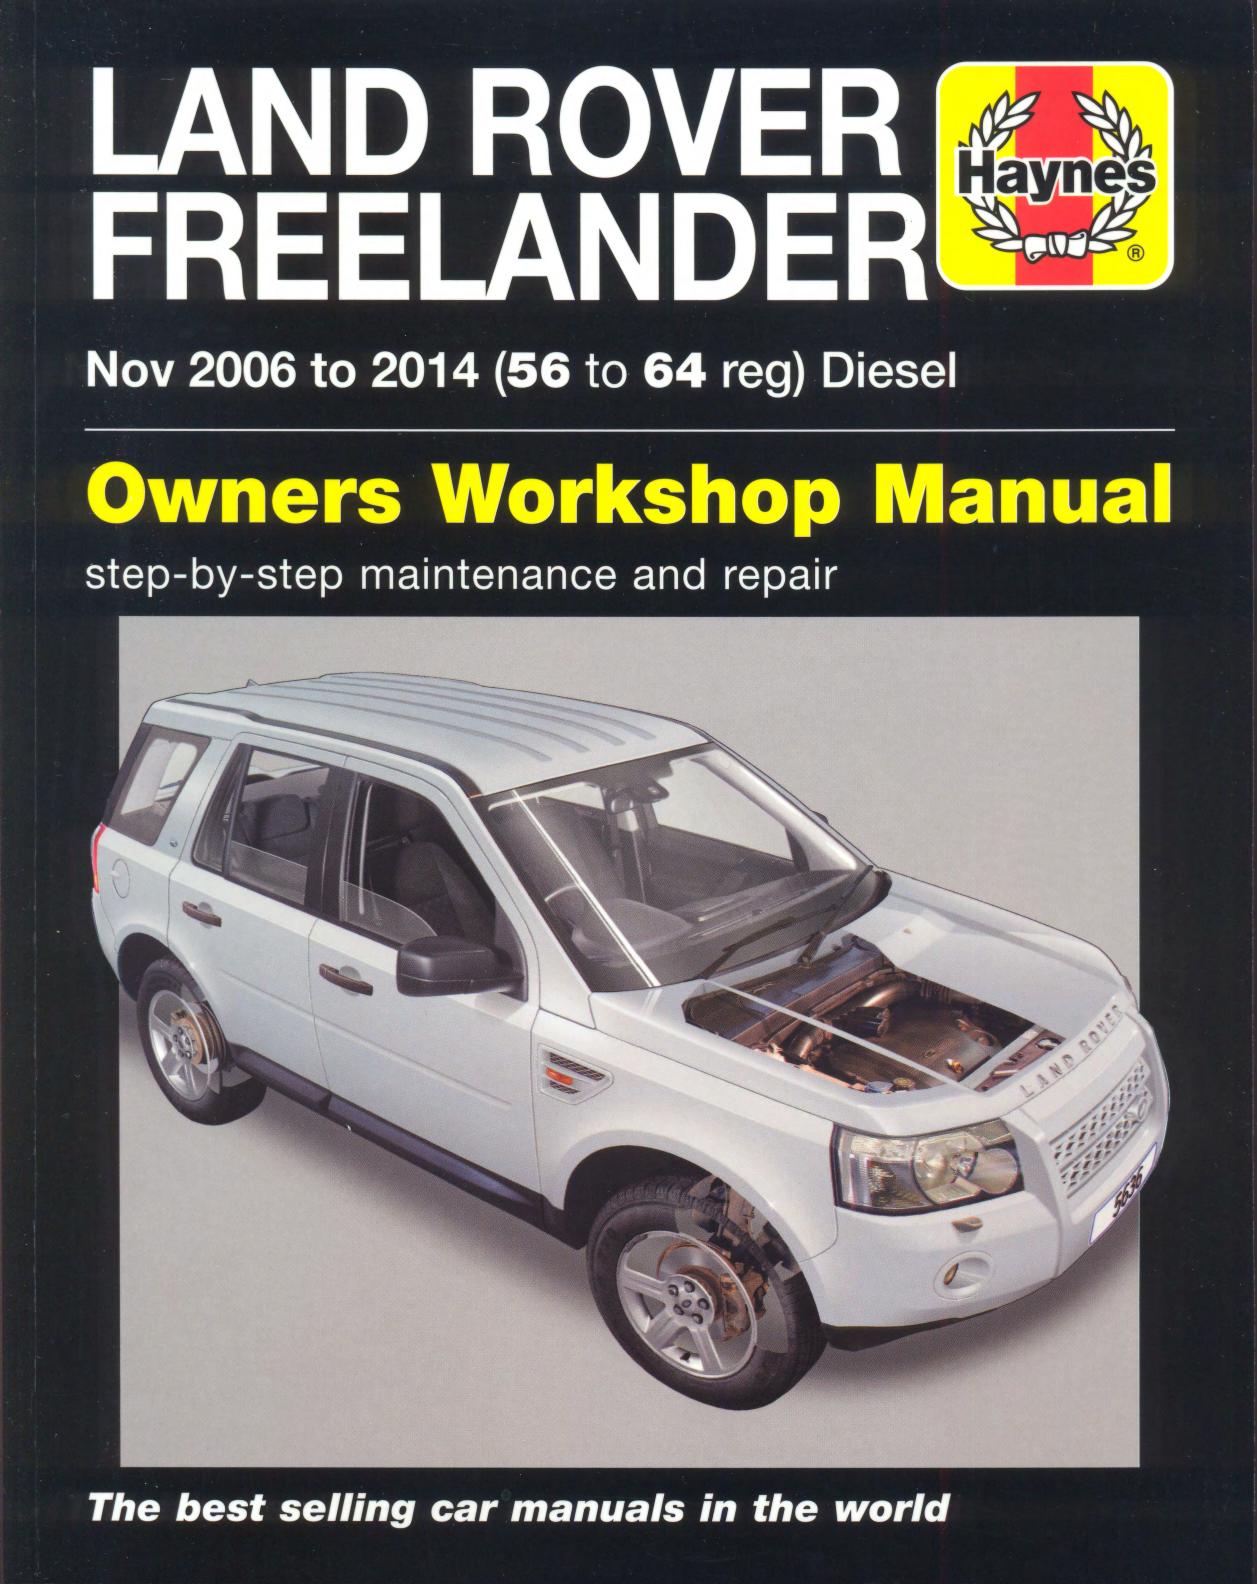 Land Rover FREELANDER Ownwers Workshop Manual by Haynes